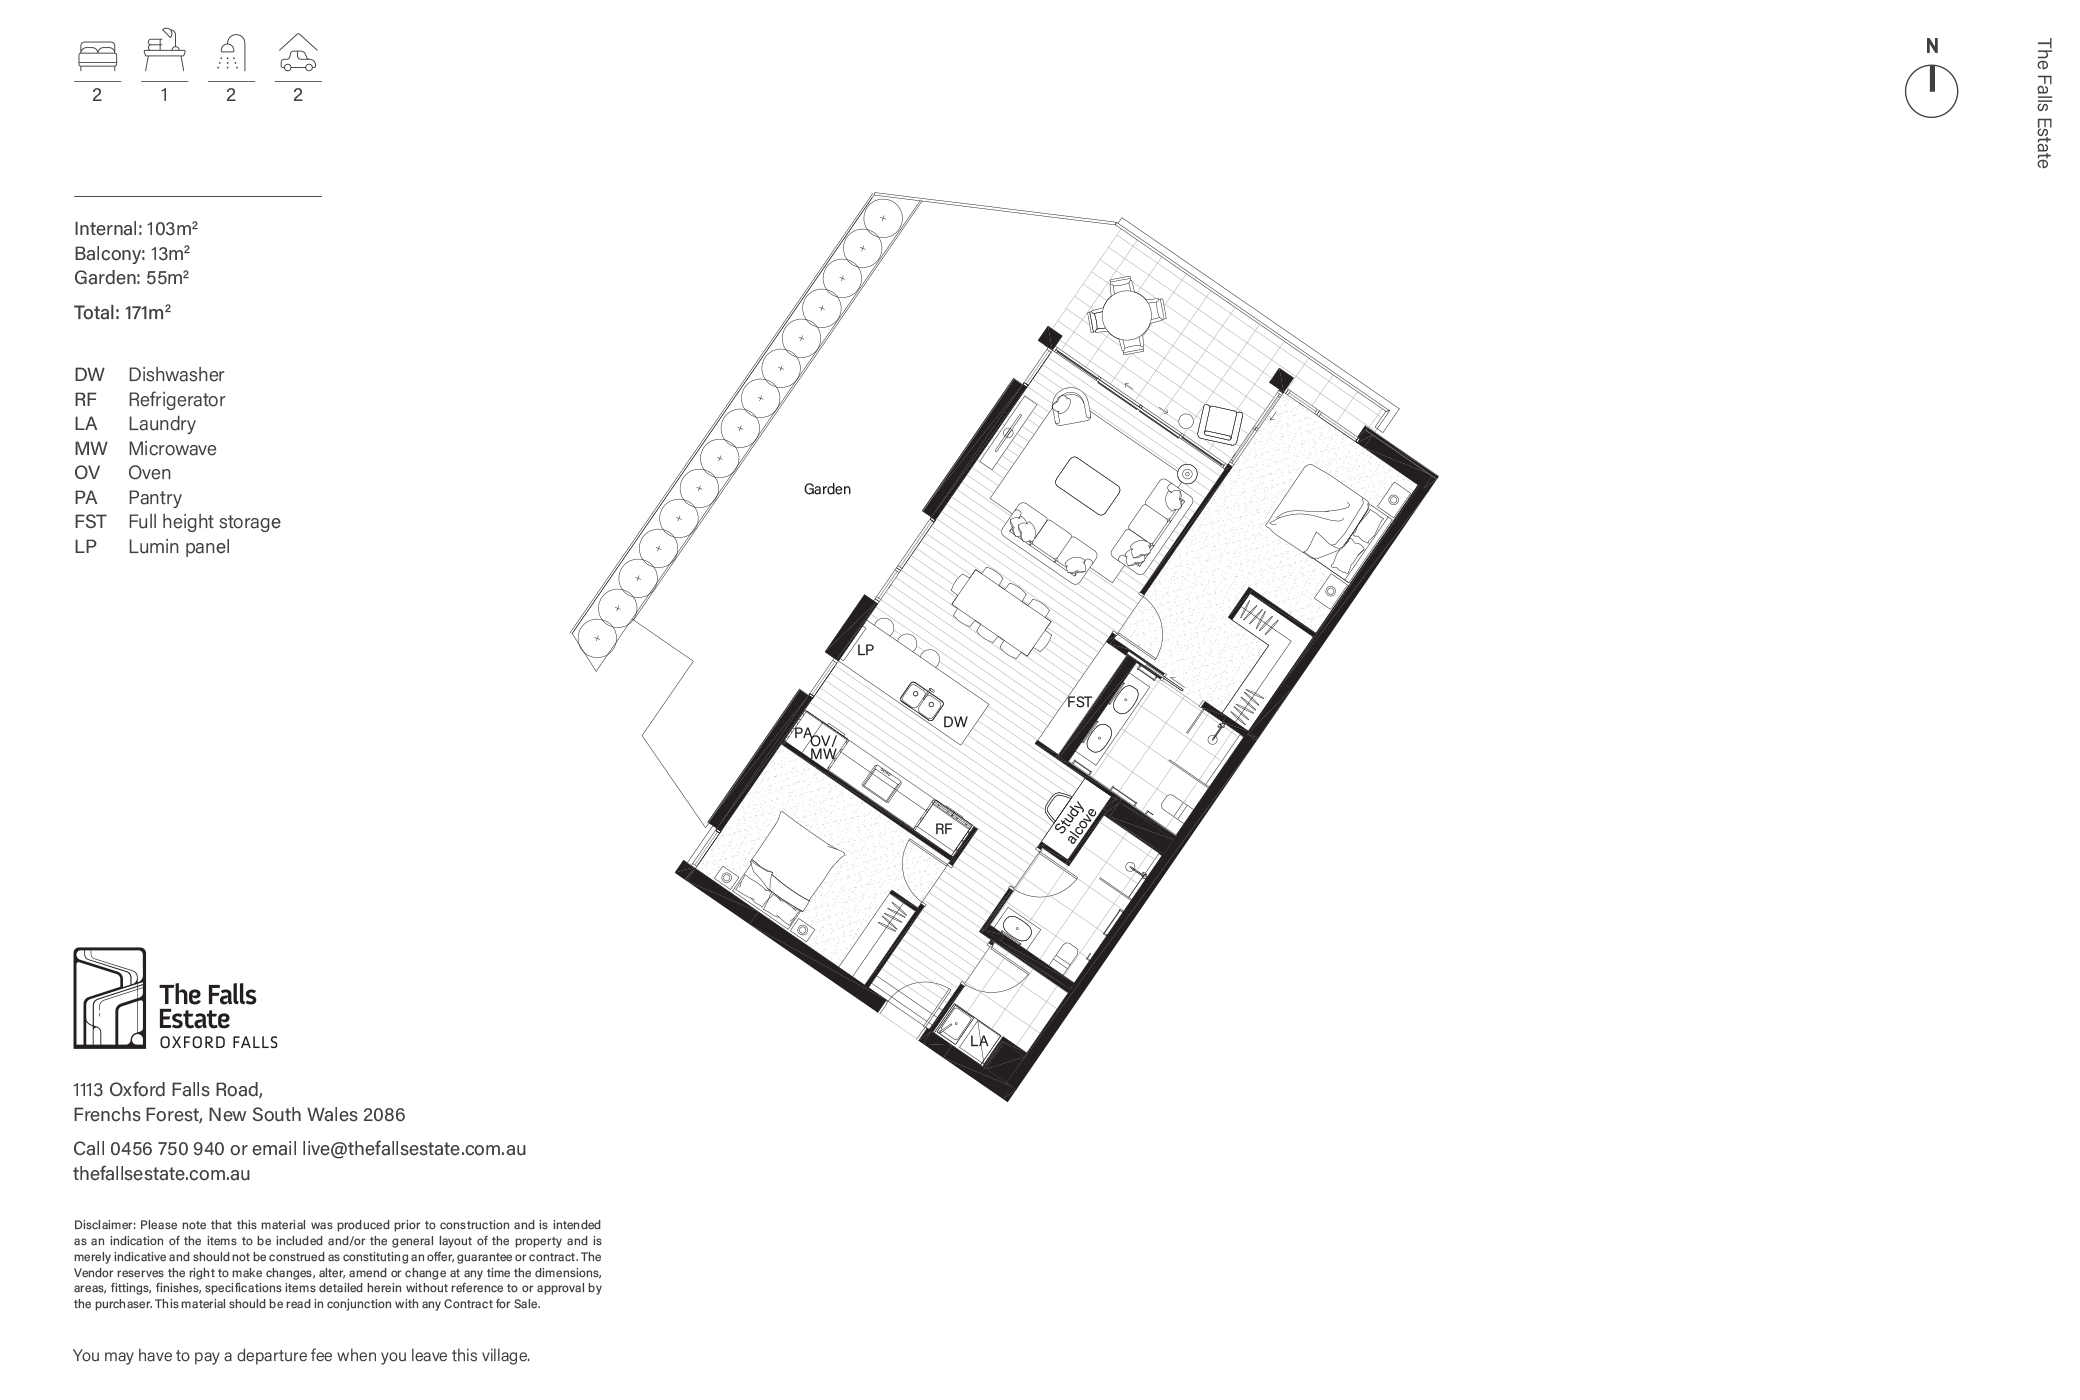 The Falls Estate example apartment floor plan